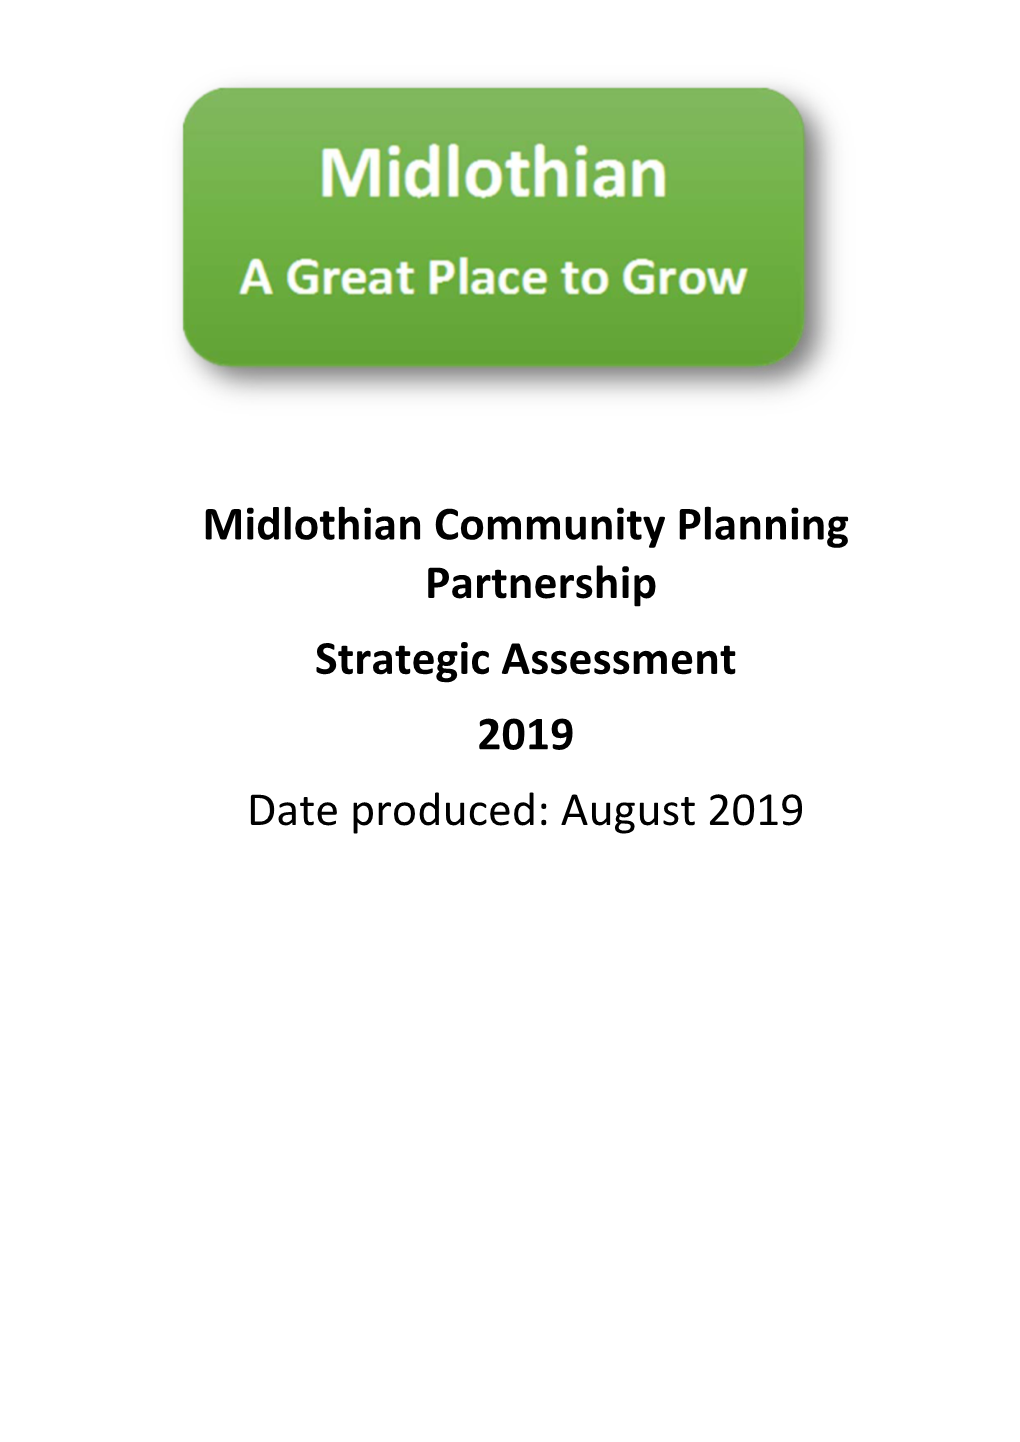 Midlothian Community Planning Partnership Strategic Assessment 2019 Date Produced: August 2019